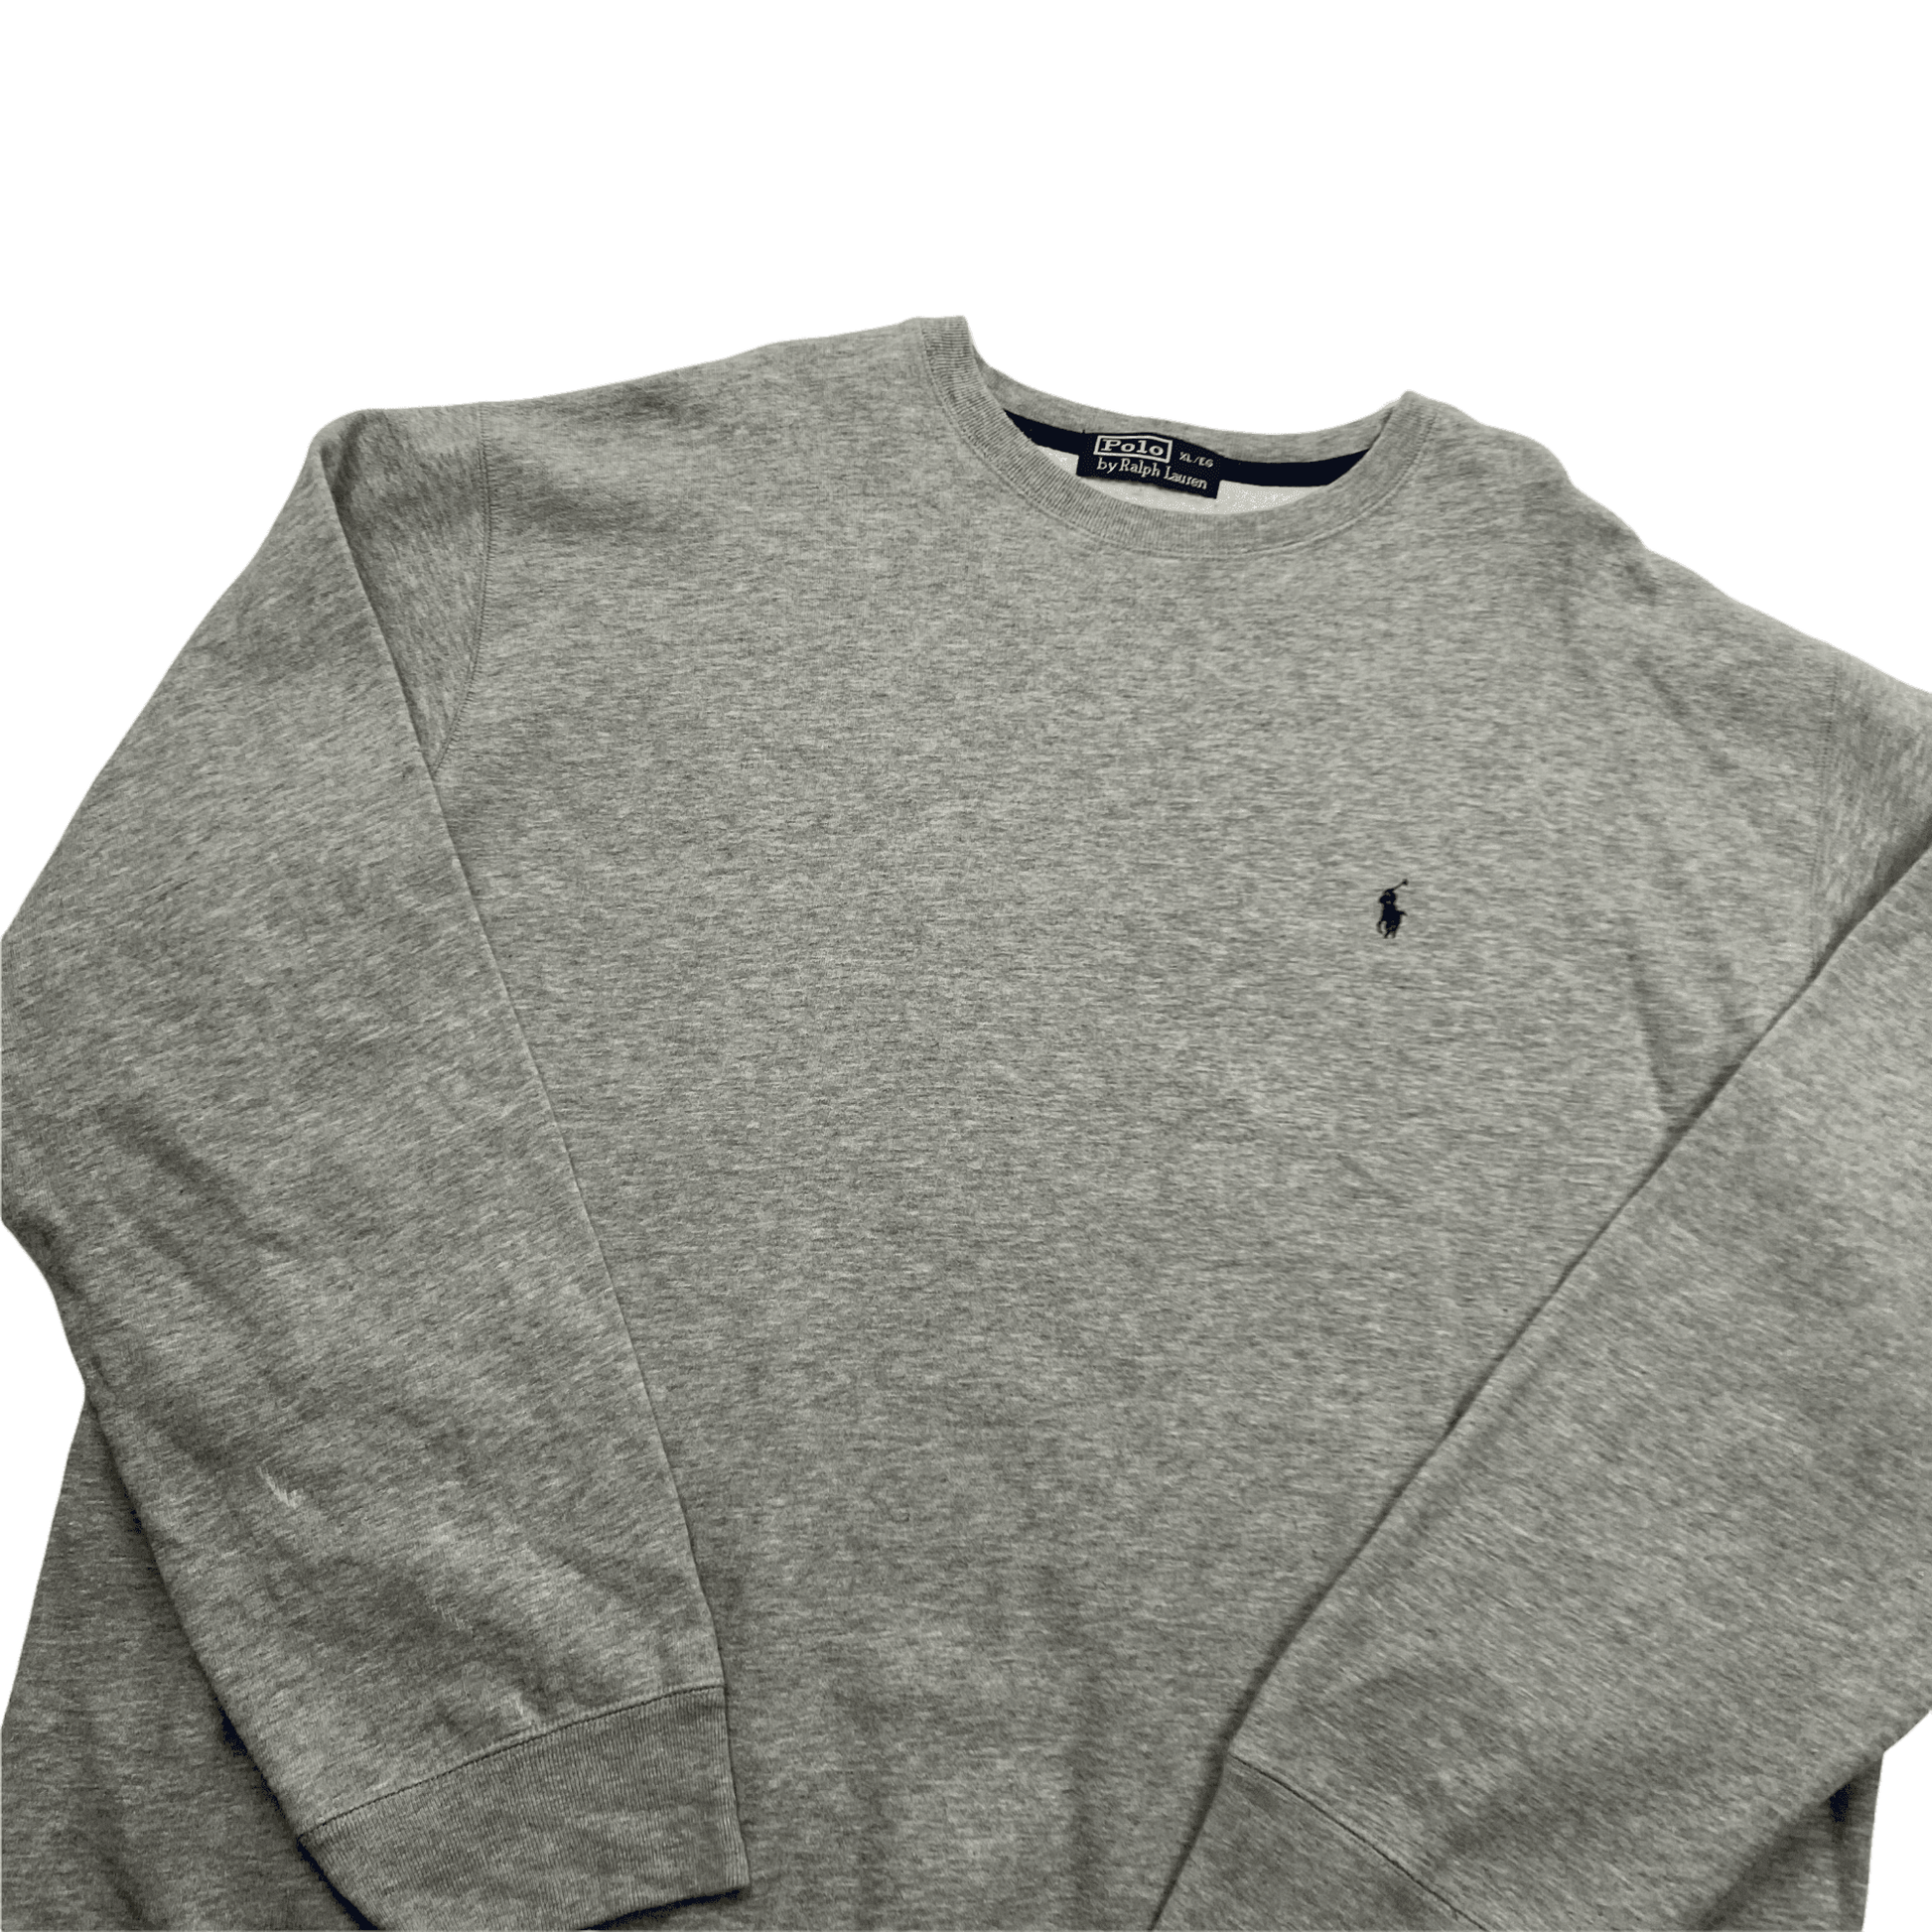 Vintage 90s Grey Polo Ralph Lauren Sweatshirt - Extra Large - The Streetwear Studio